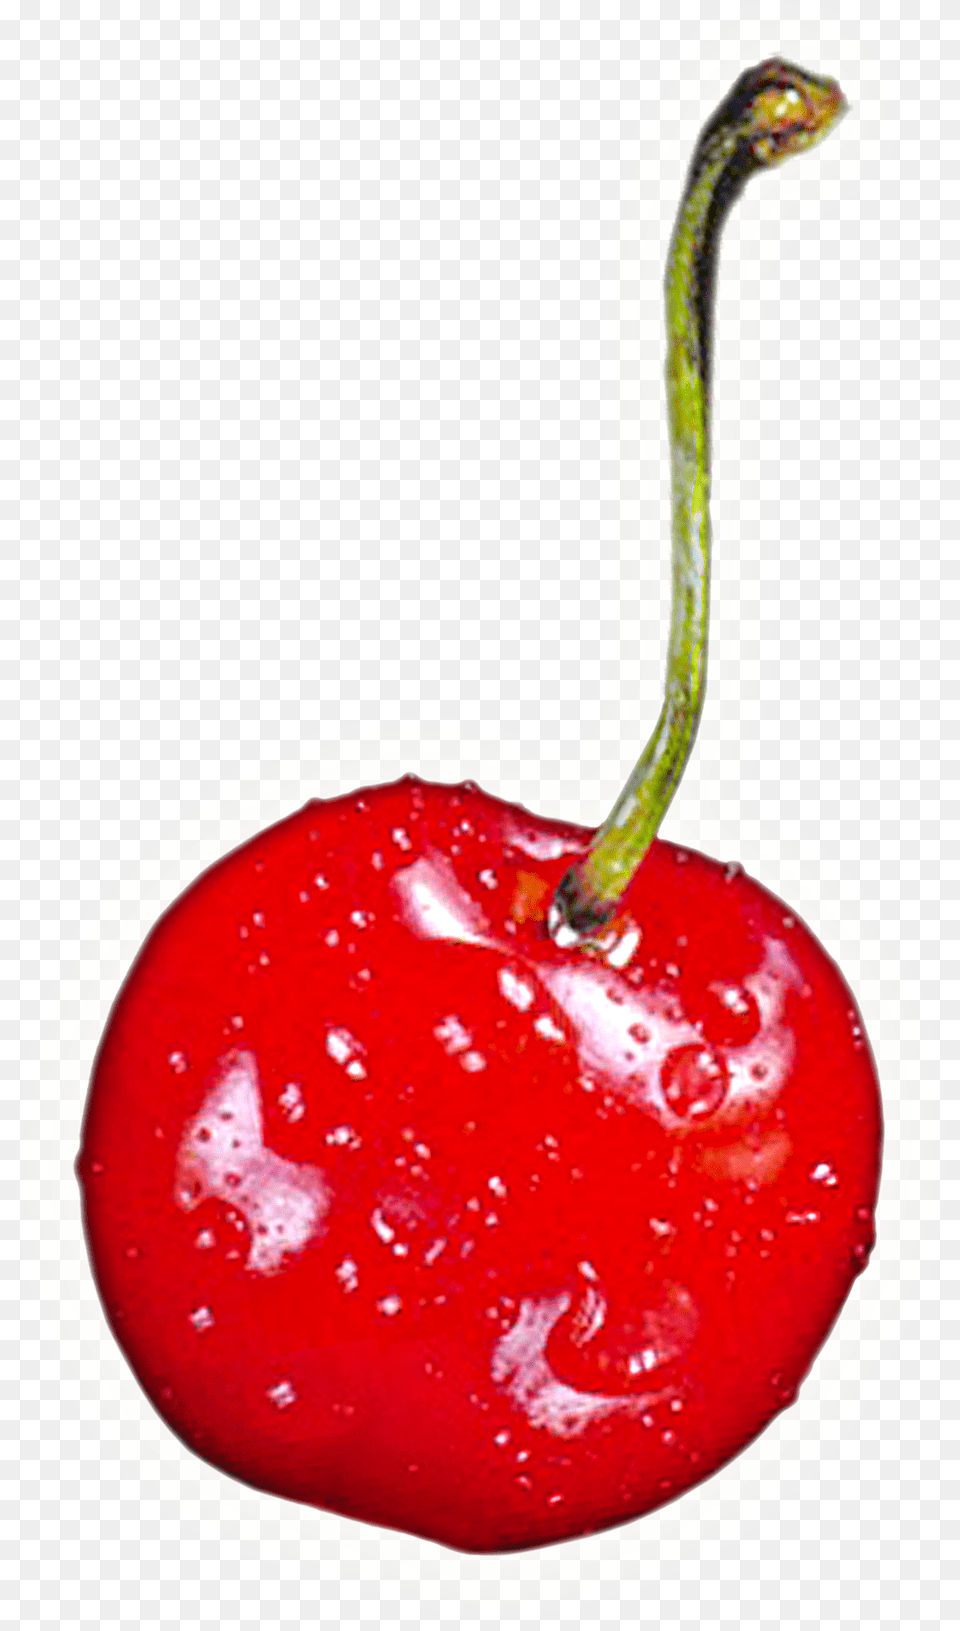 Cherry Free Transparent Background Cherries Transparent, Food, Fruit, Plant, Produce Png Image